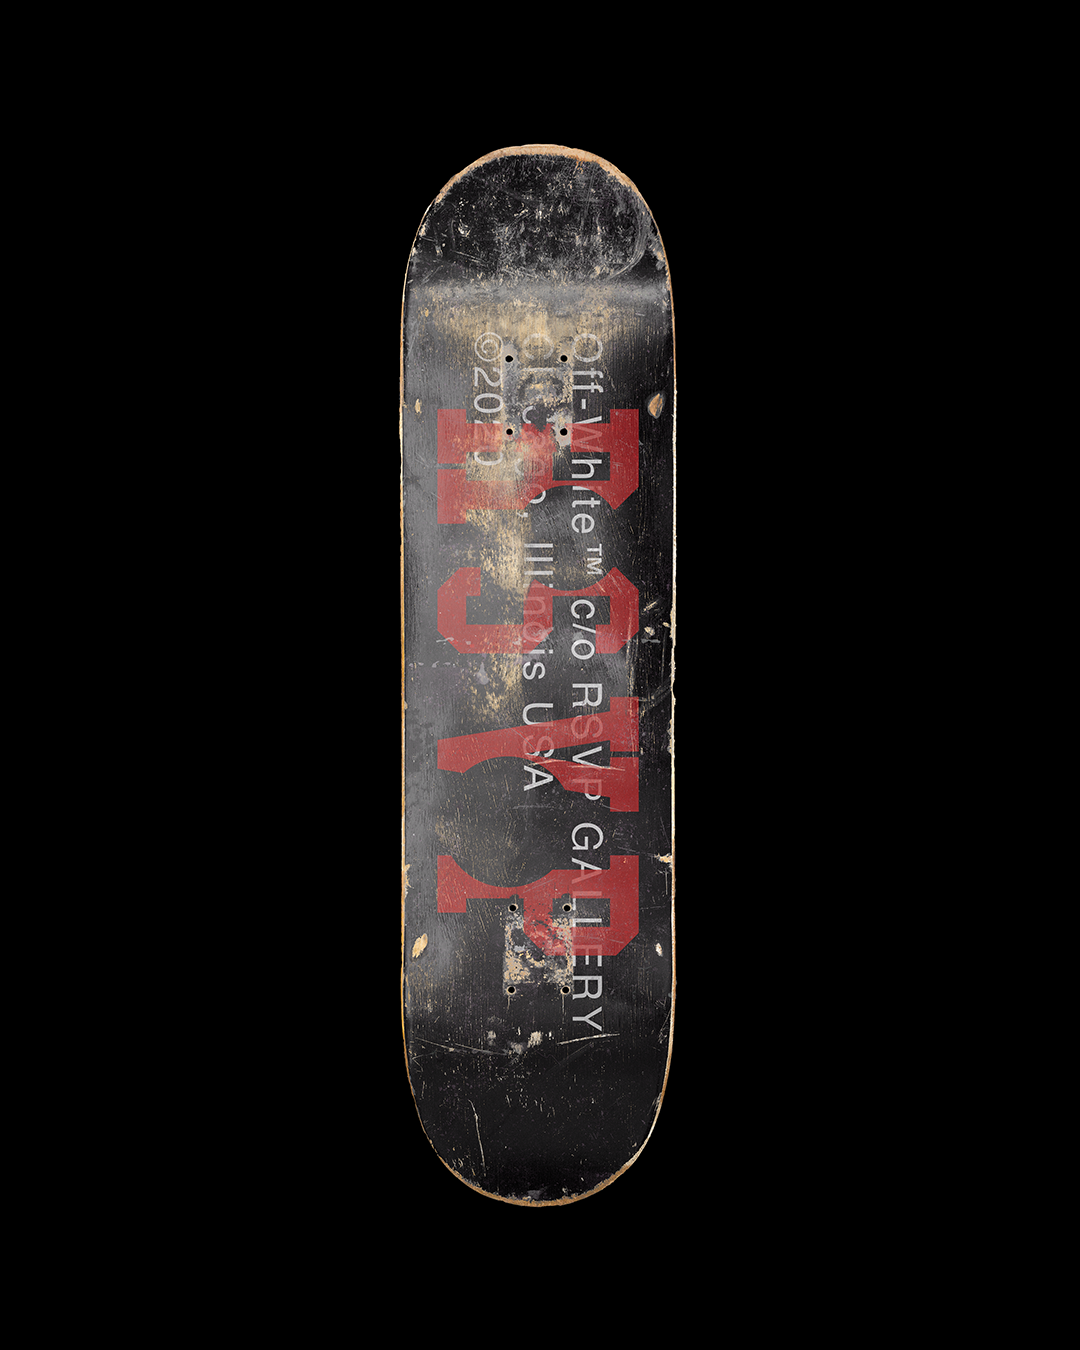 Williams x Abloh skateboard by Virgil Abloh x DGK - The Daily Board